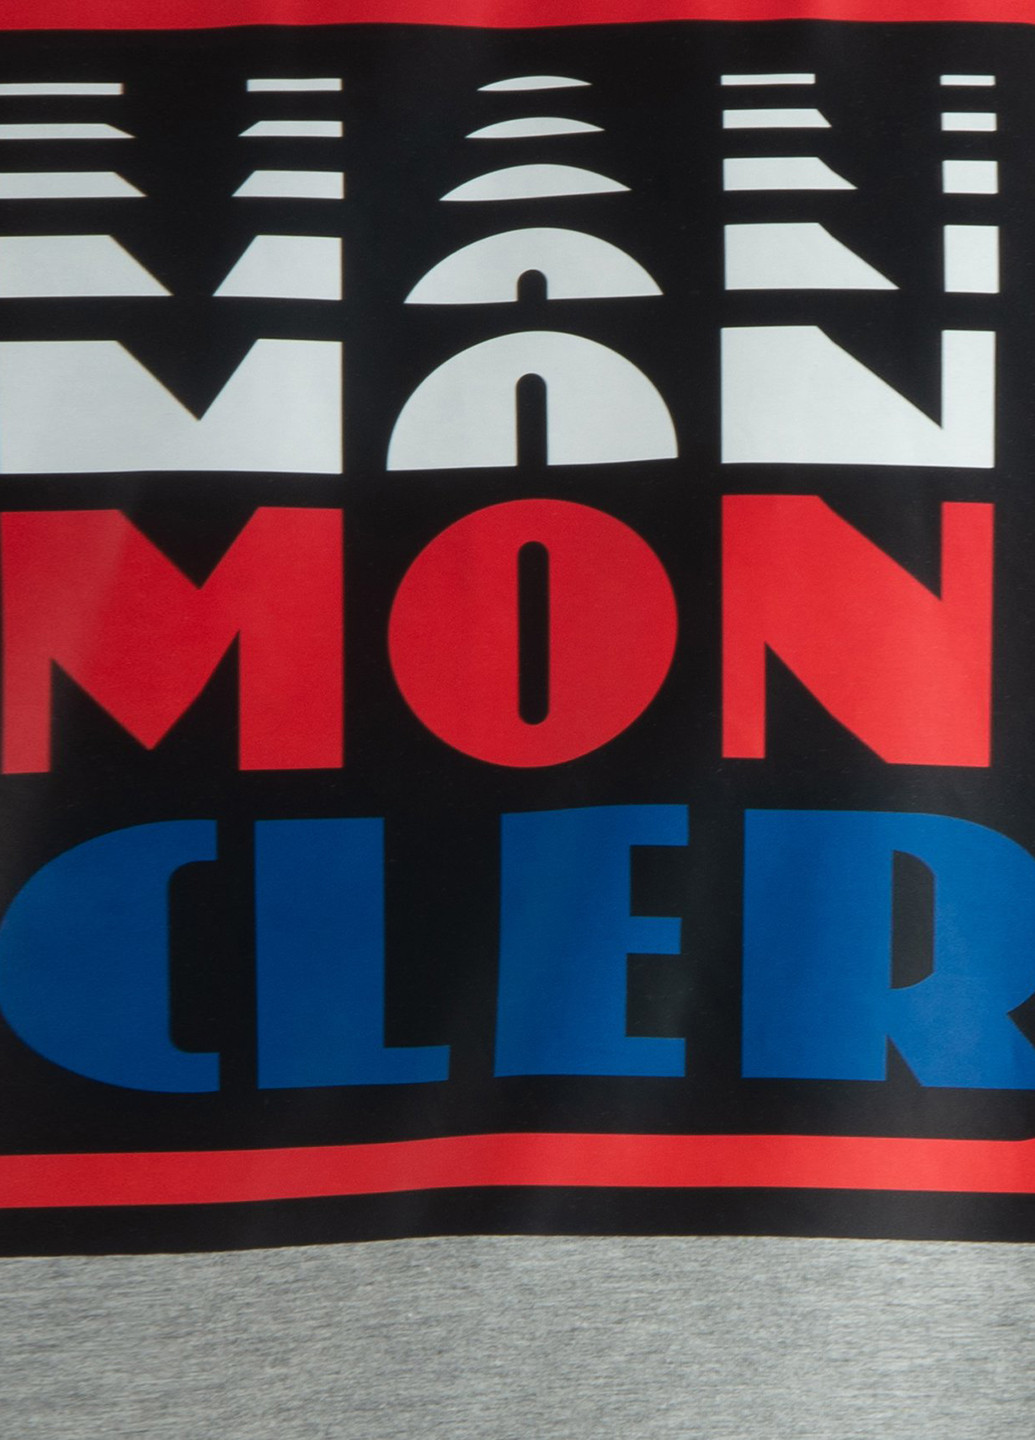 Серая футболка Moncler